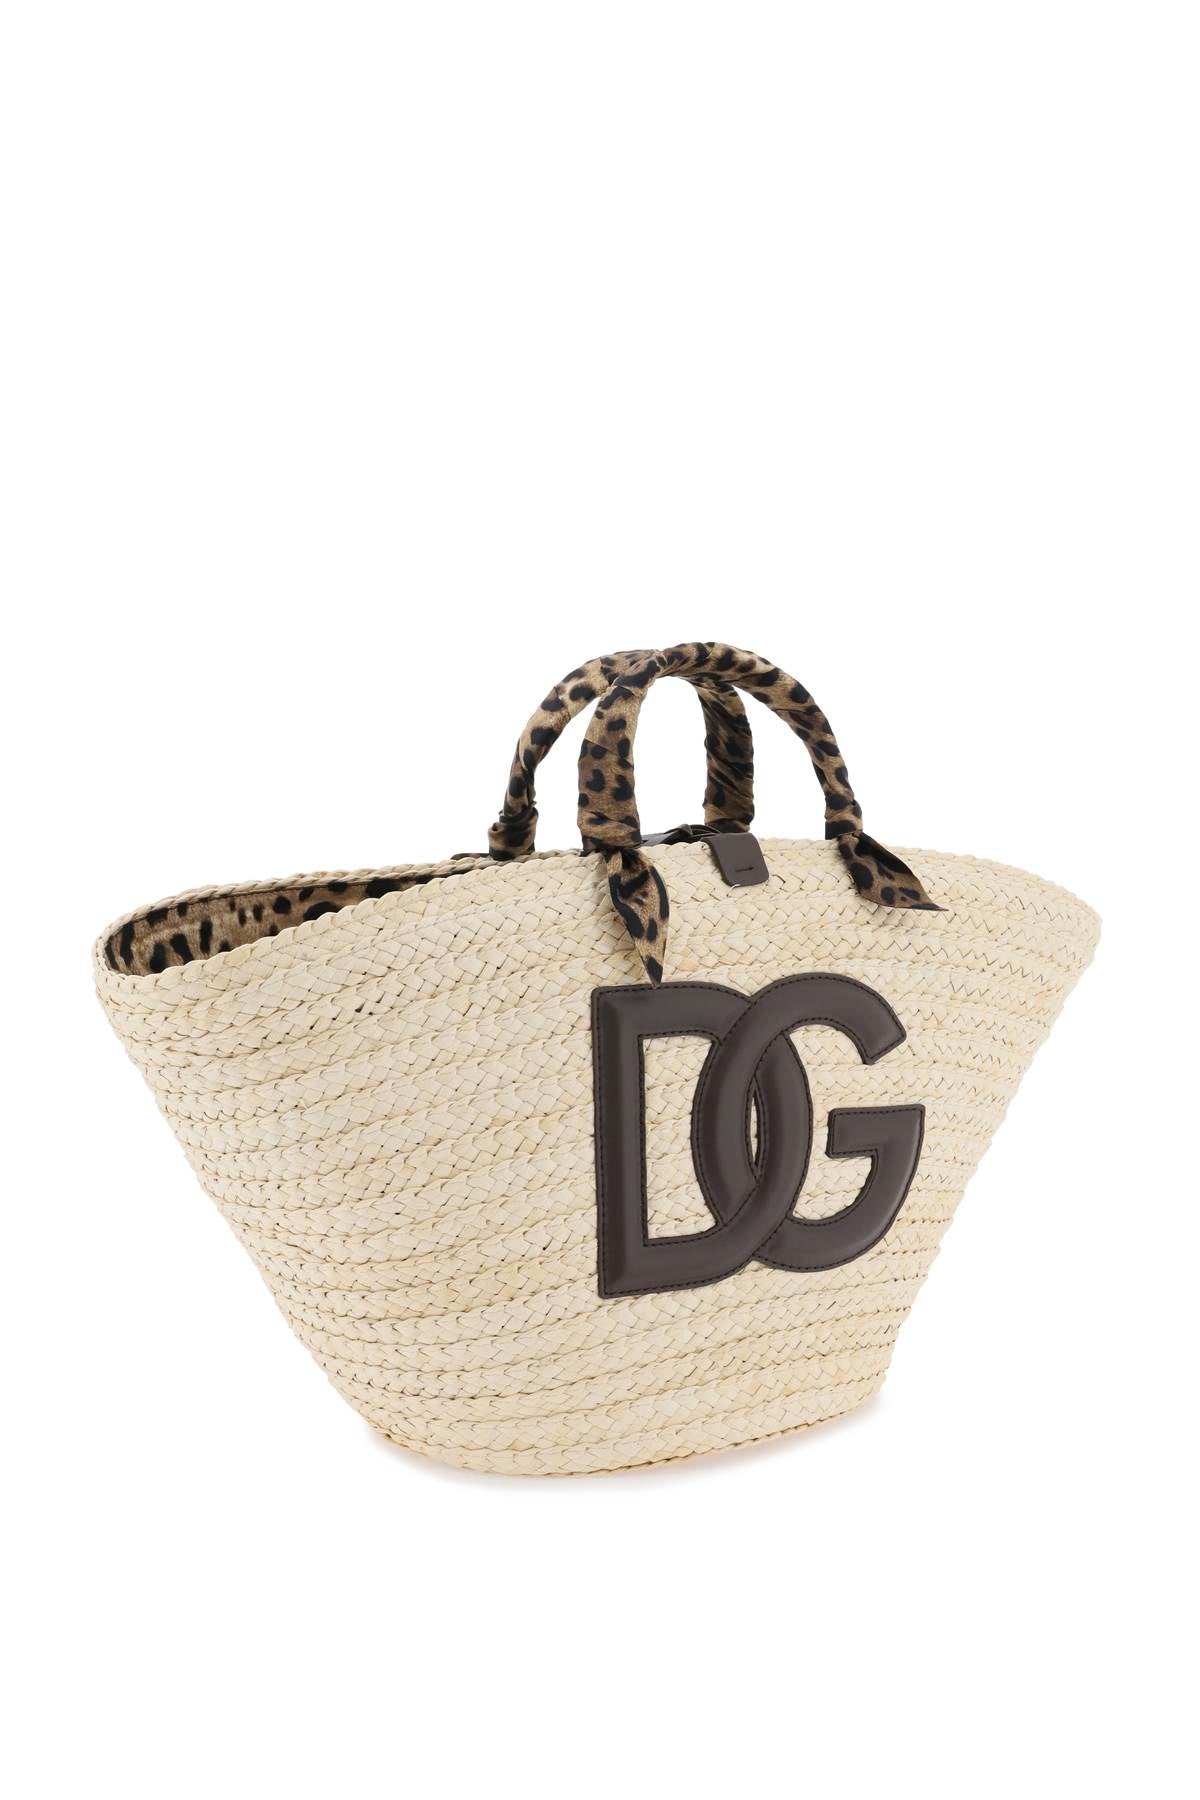 DOLCE & GABBANA Kendra Tote Handbag in Woven Straw with Leopard Print Silk Handles